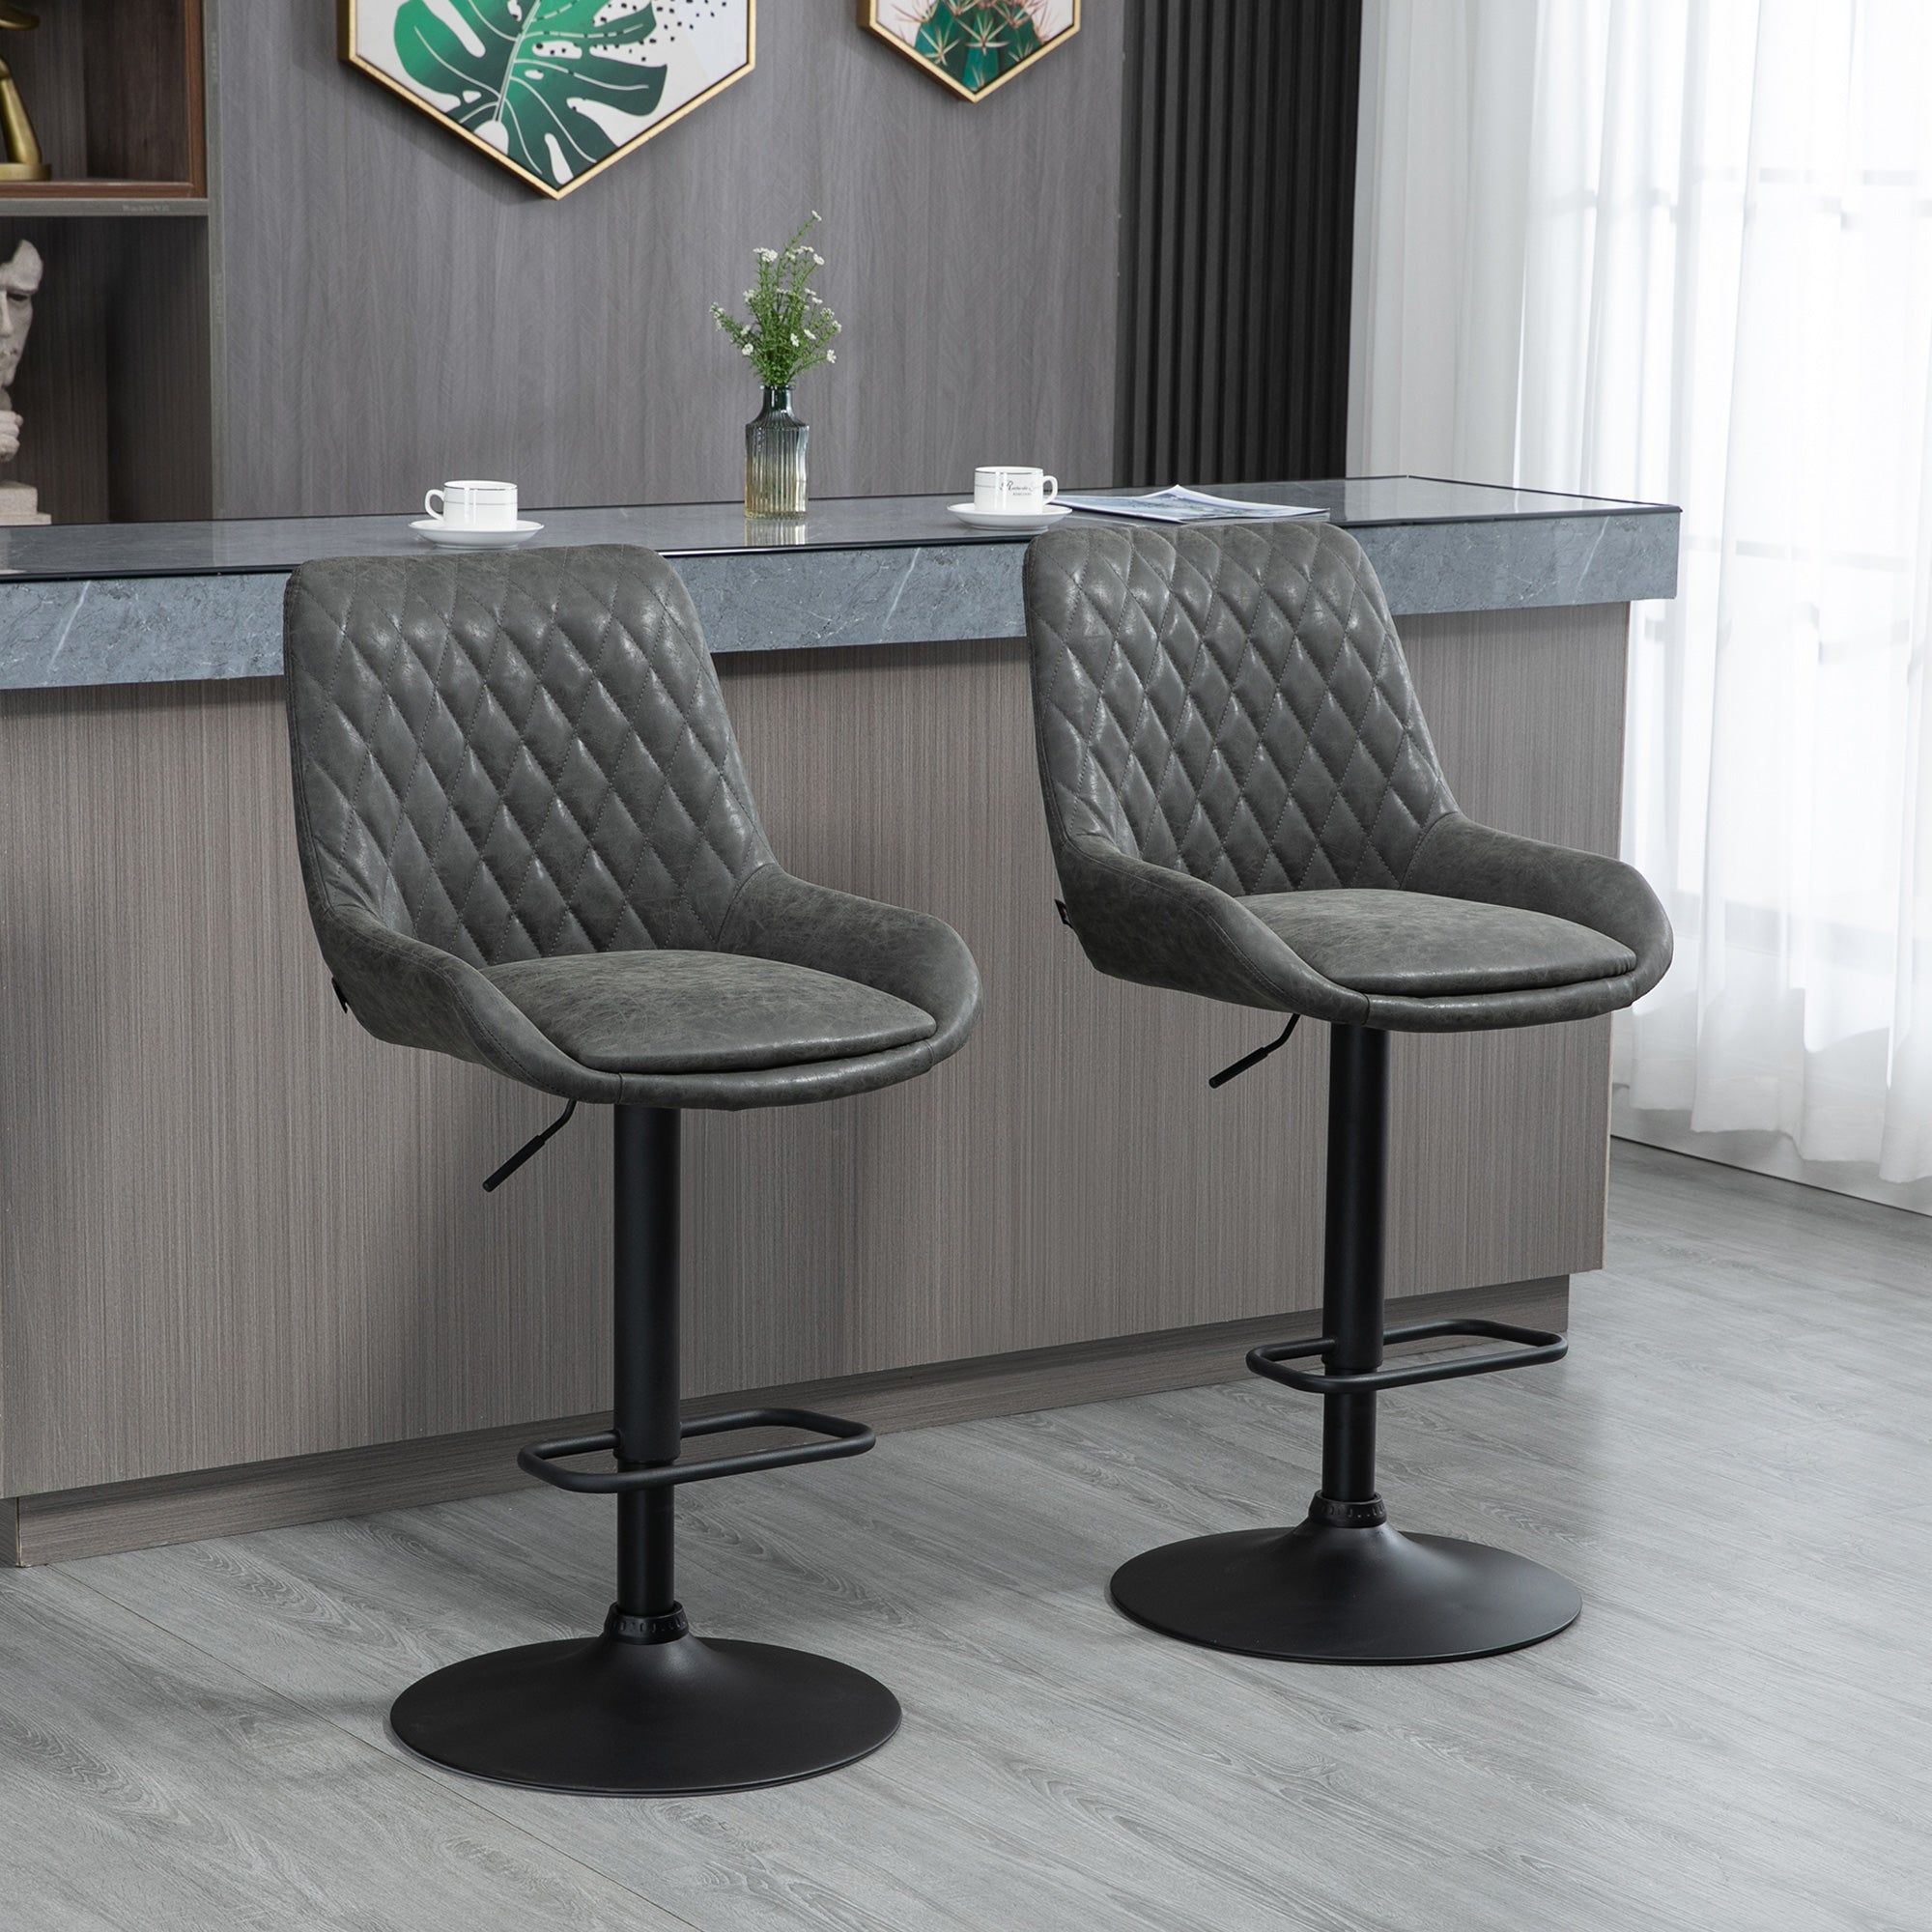 Retro Bar Stools Set of 2, Adjustable Kitchen Stool, Upholstered Bar Chairs with Back, Swivel Seat, Dark Grey  AOSOM   